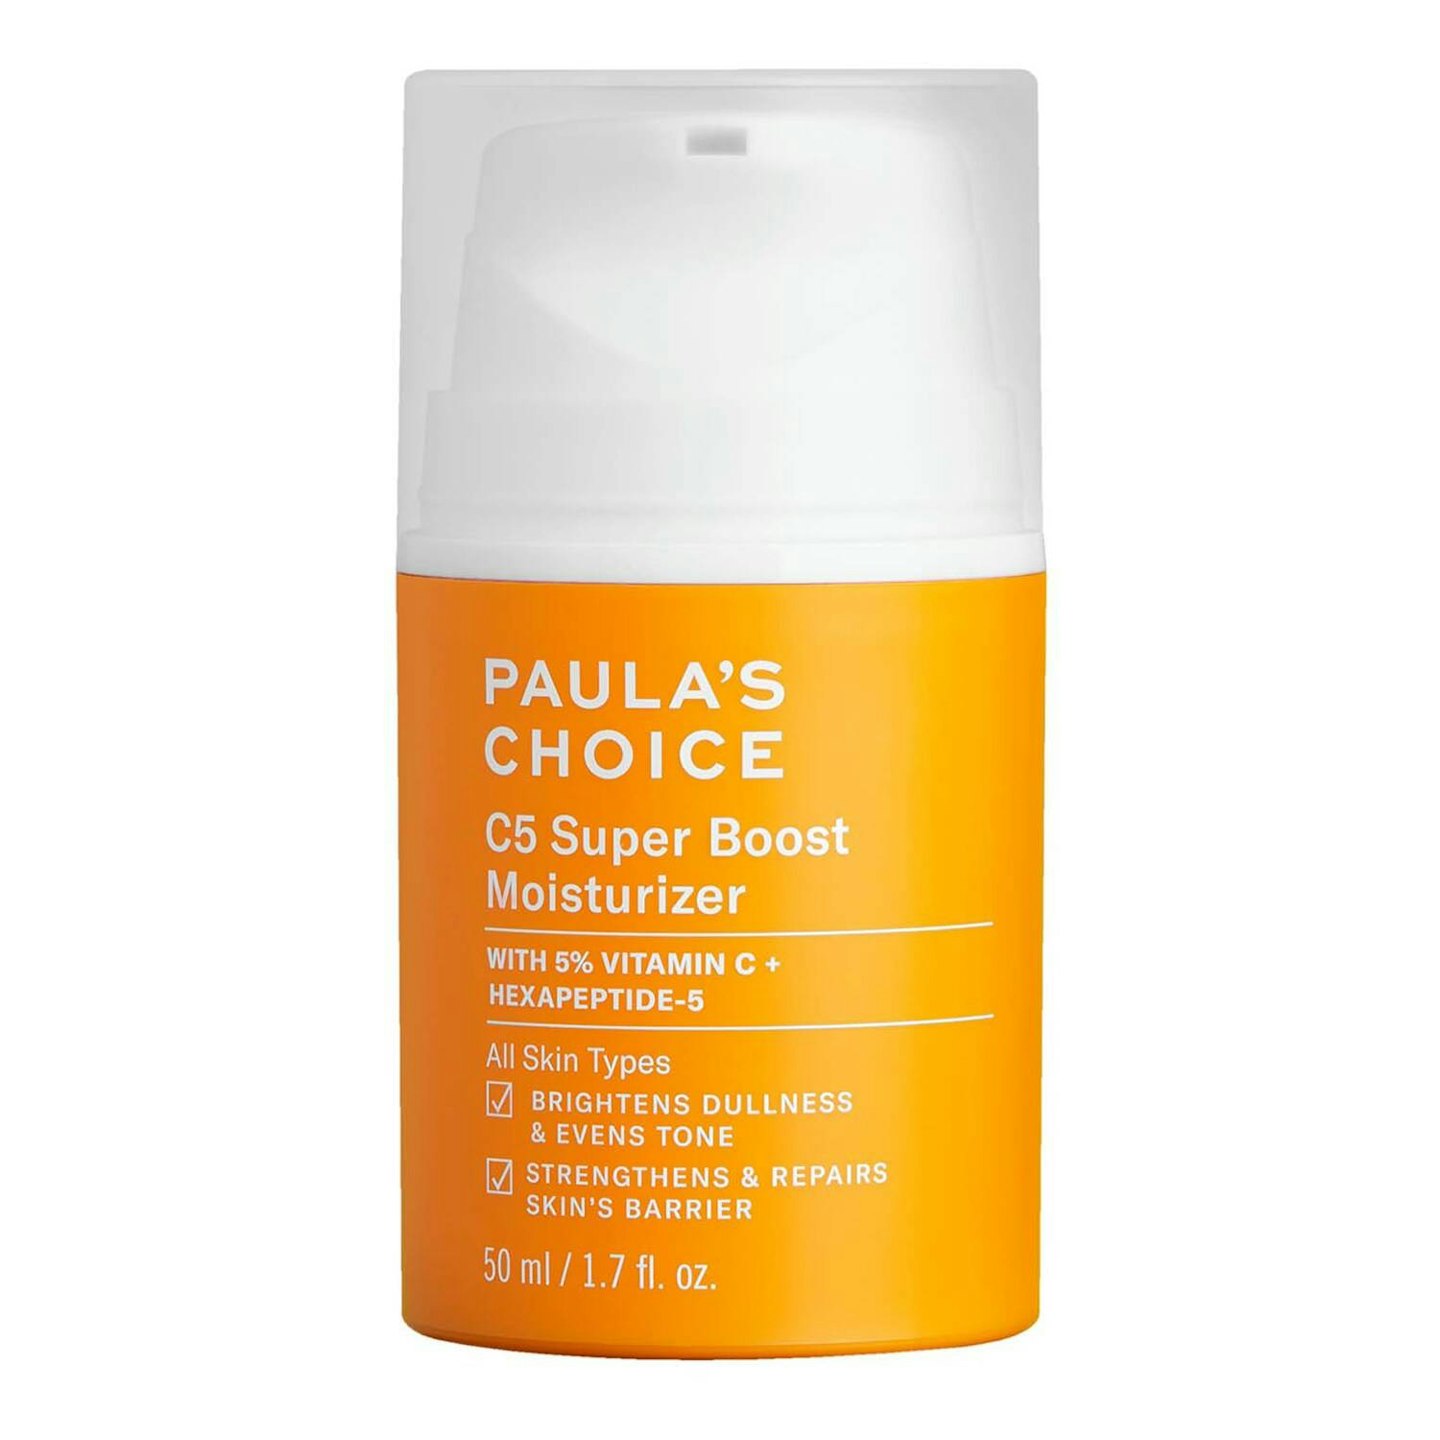 Paula's Choice C5 super boost moisturiser